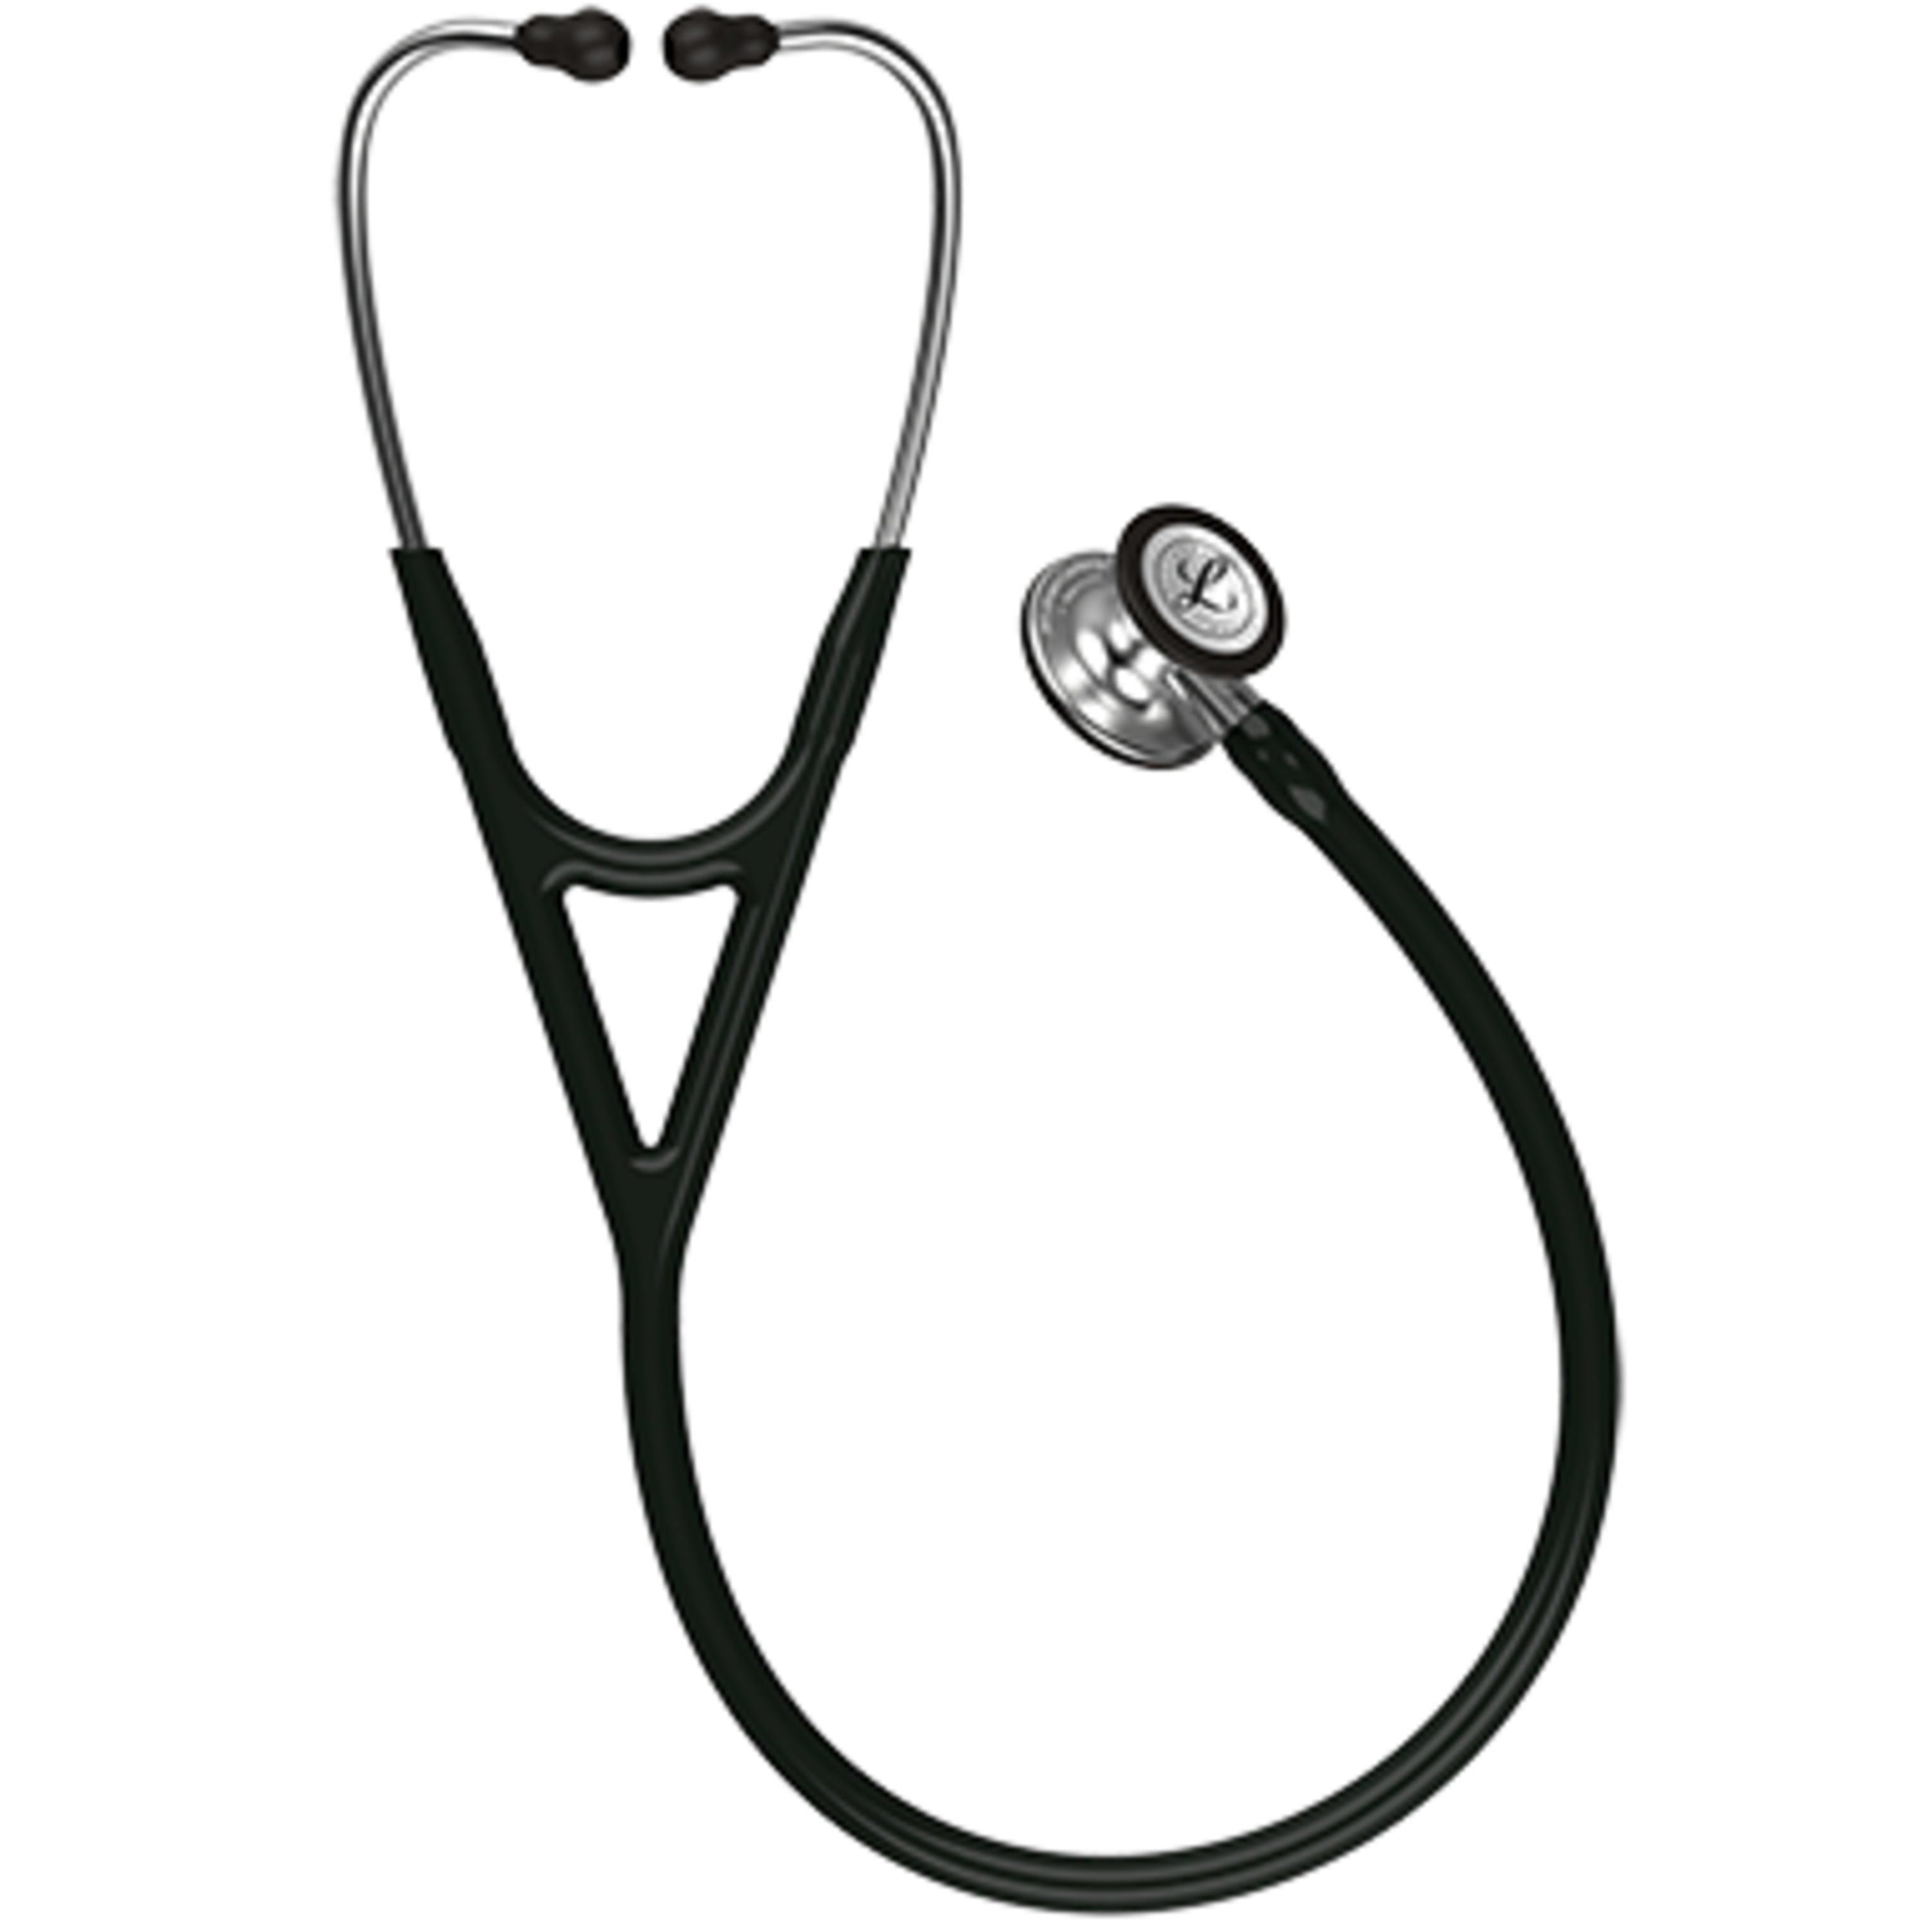  3M Littmann Cardiology IV Diagnostic Stethoscope, Black-Finish  Chestpiece, Black Tube, Stem and Headset, 27 inch, 6163 + 40007 Stethoscope  Identification Tag, Black : Industrial & Scientific